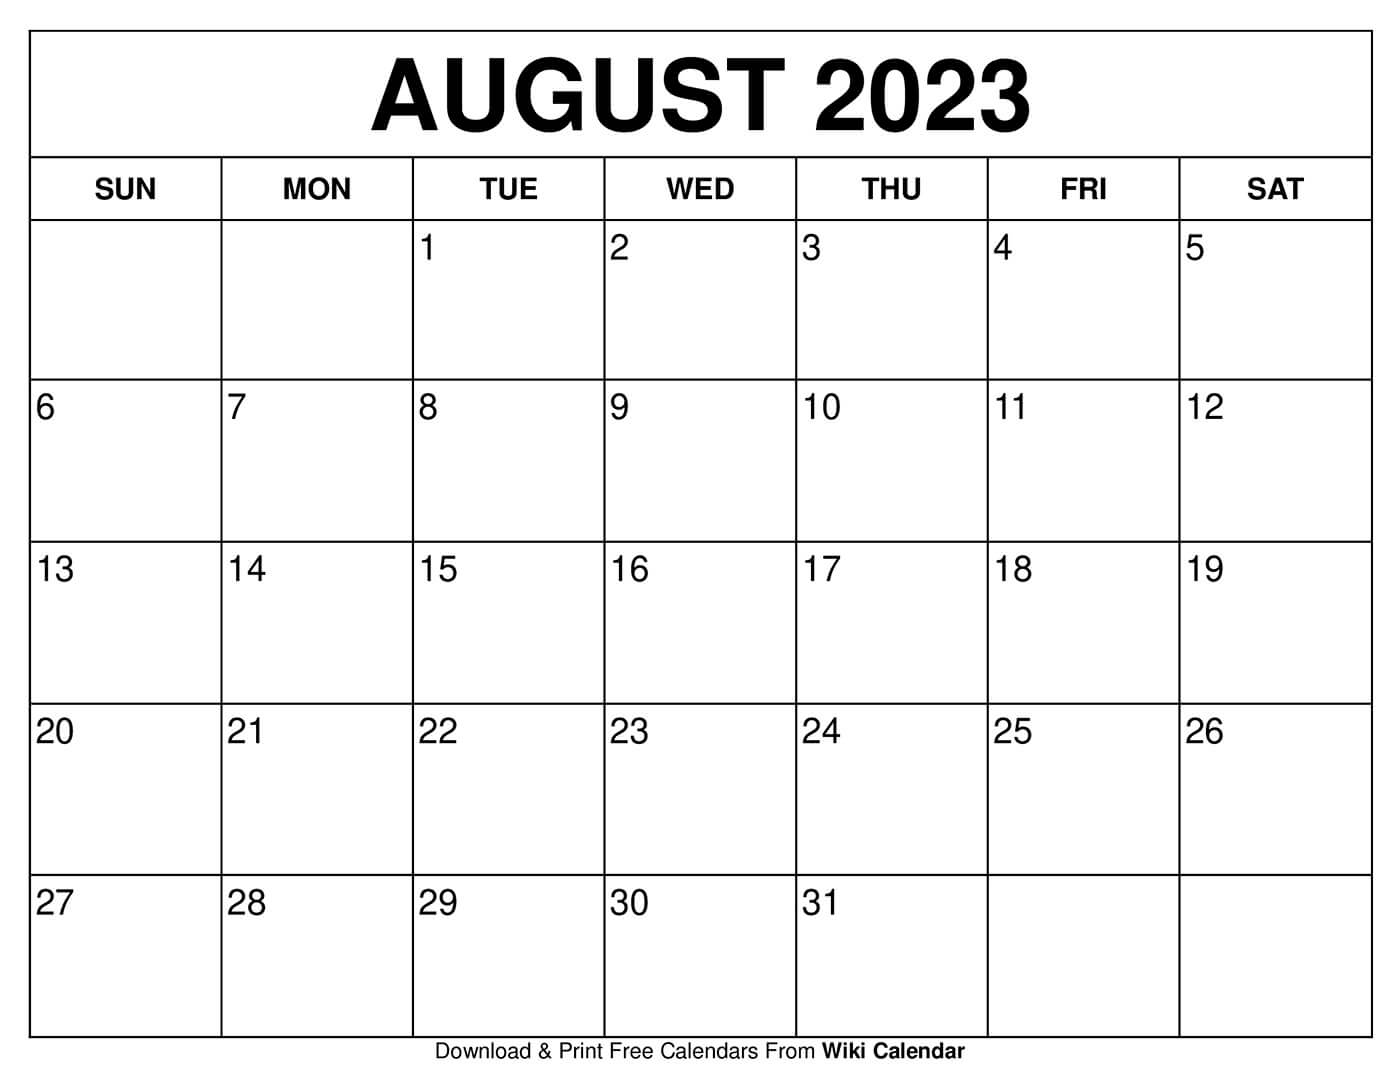 June August 2022 Calendar Free Printable August 2022 Calendars - Wiki Calendar